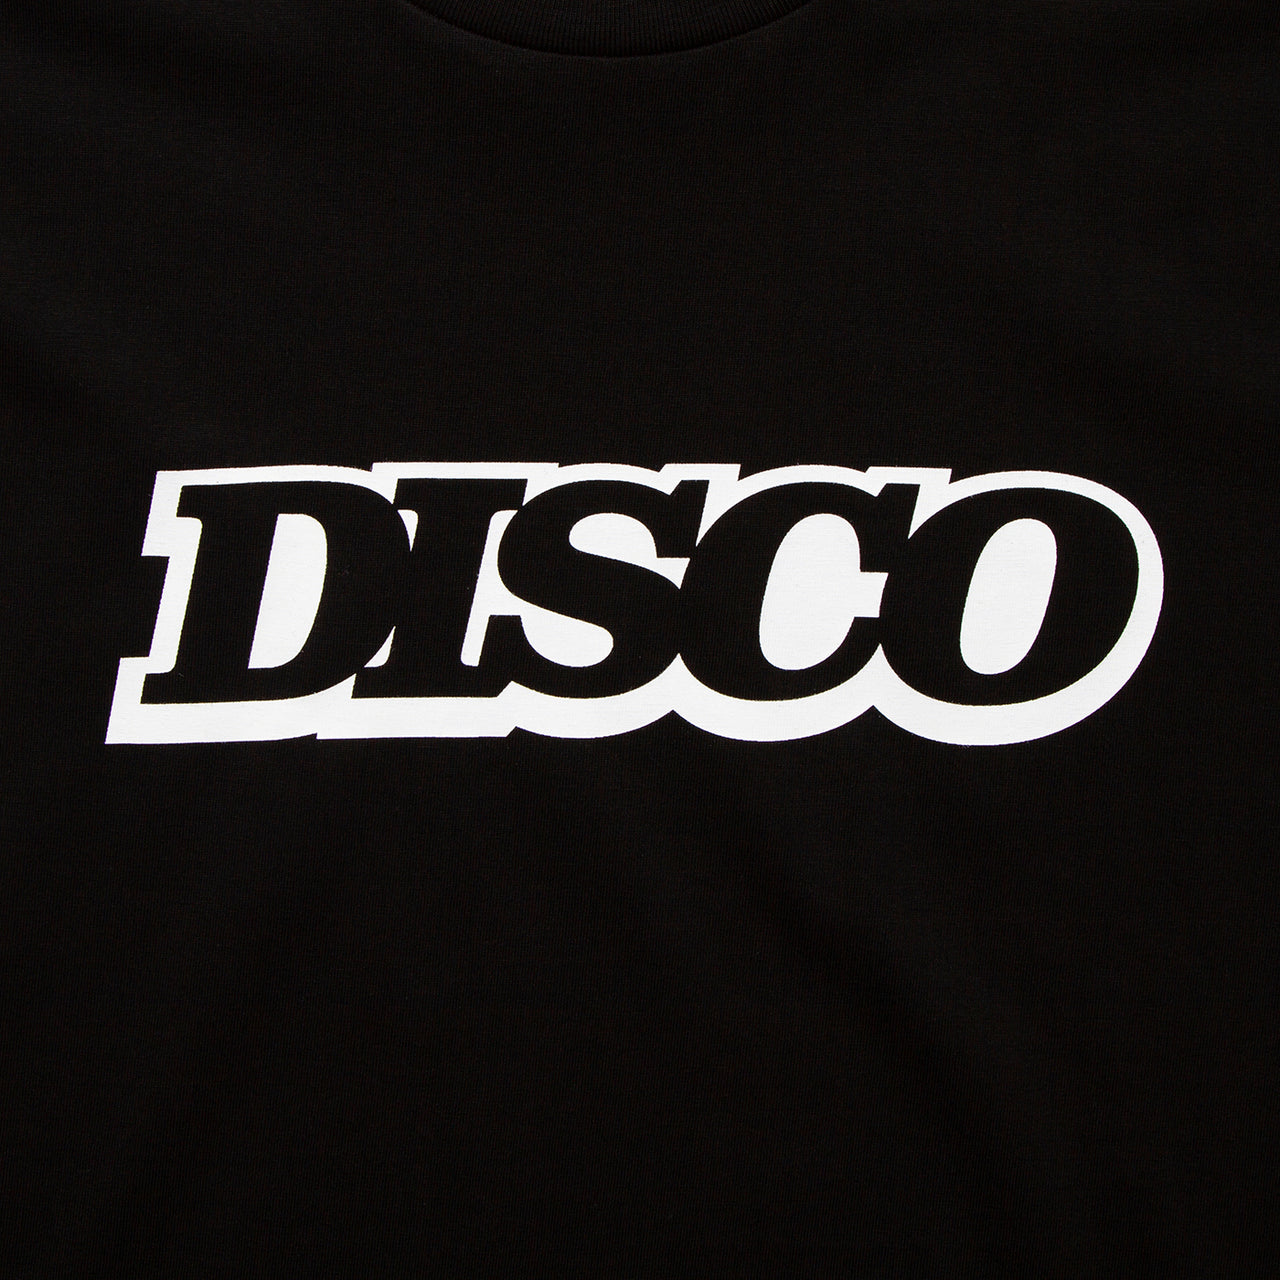 Disco Mover Front Print - Tshirt - Black